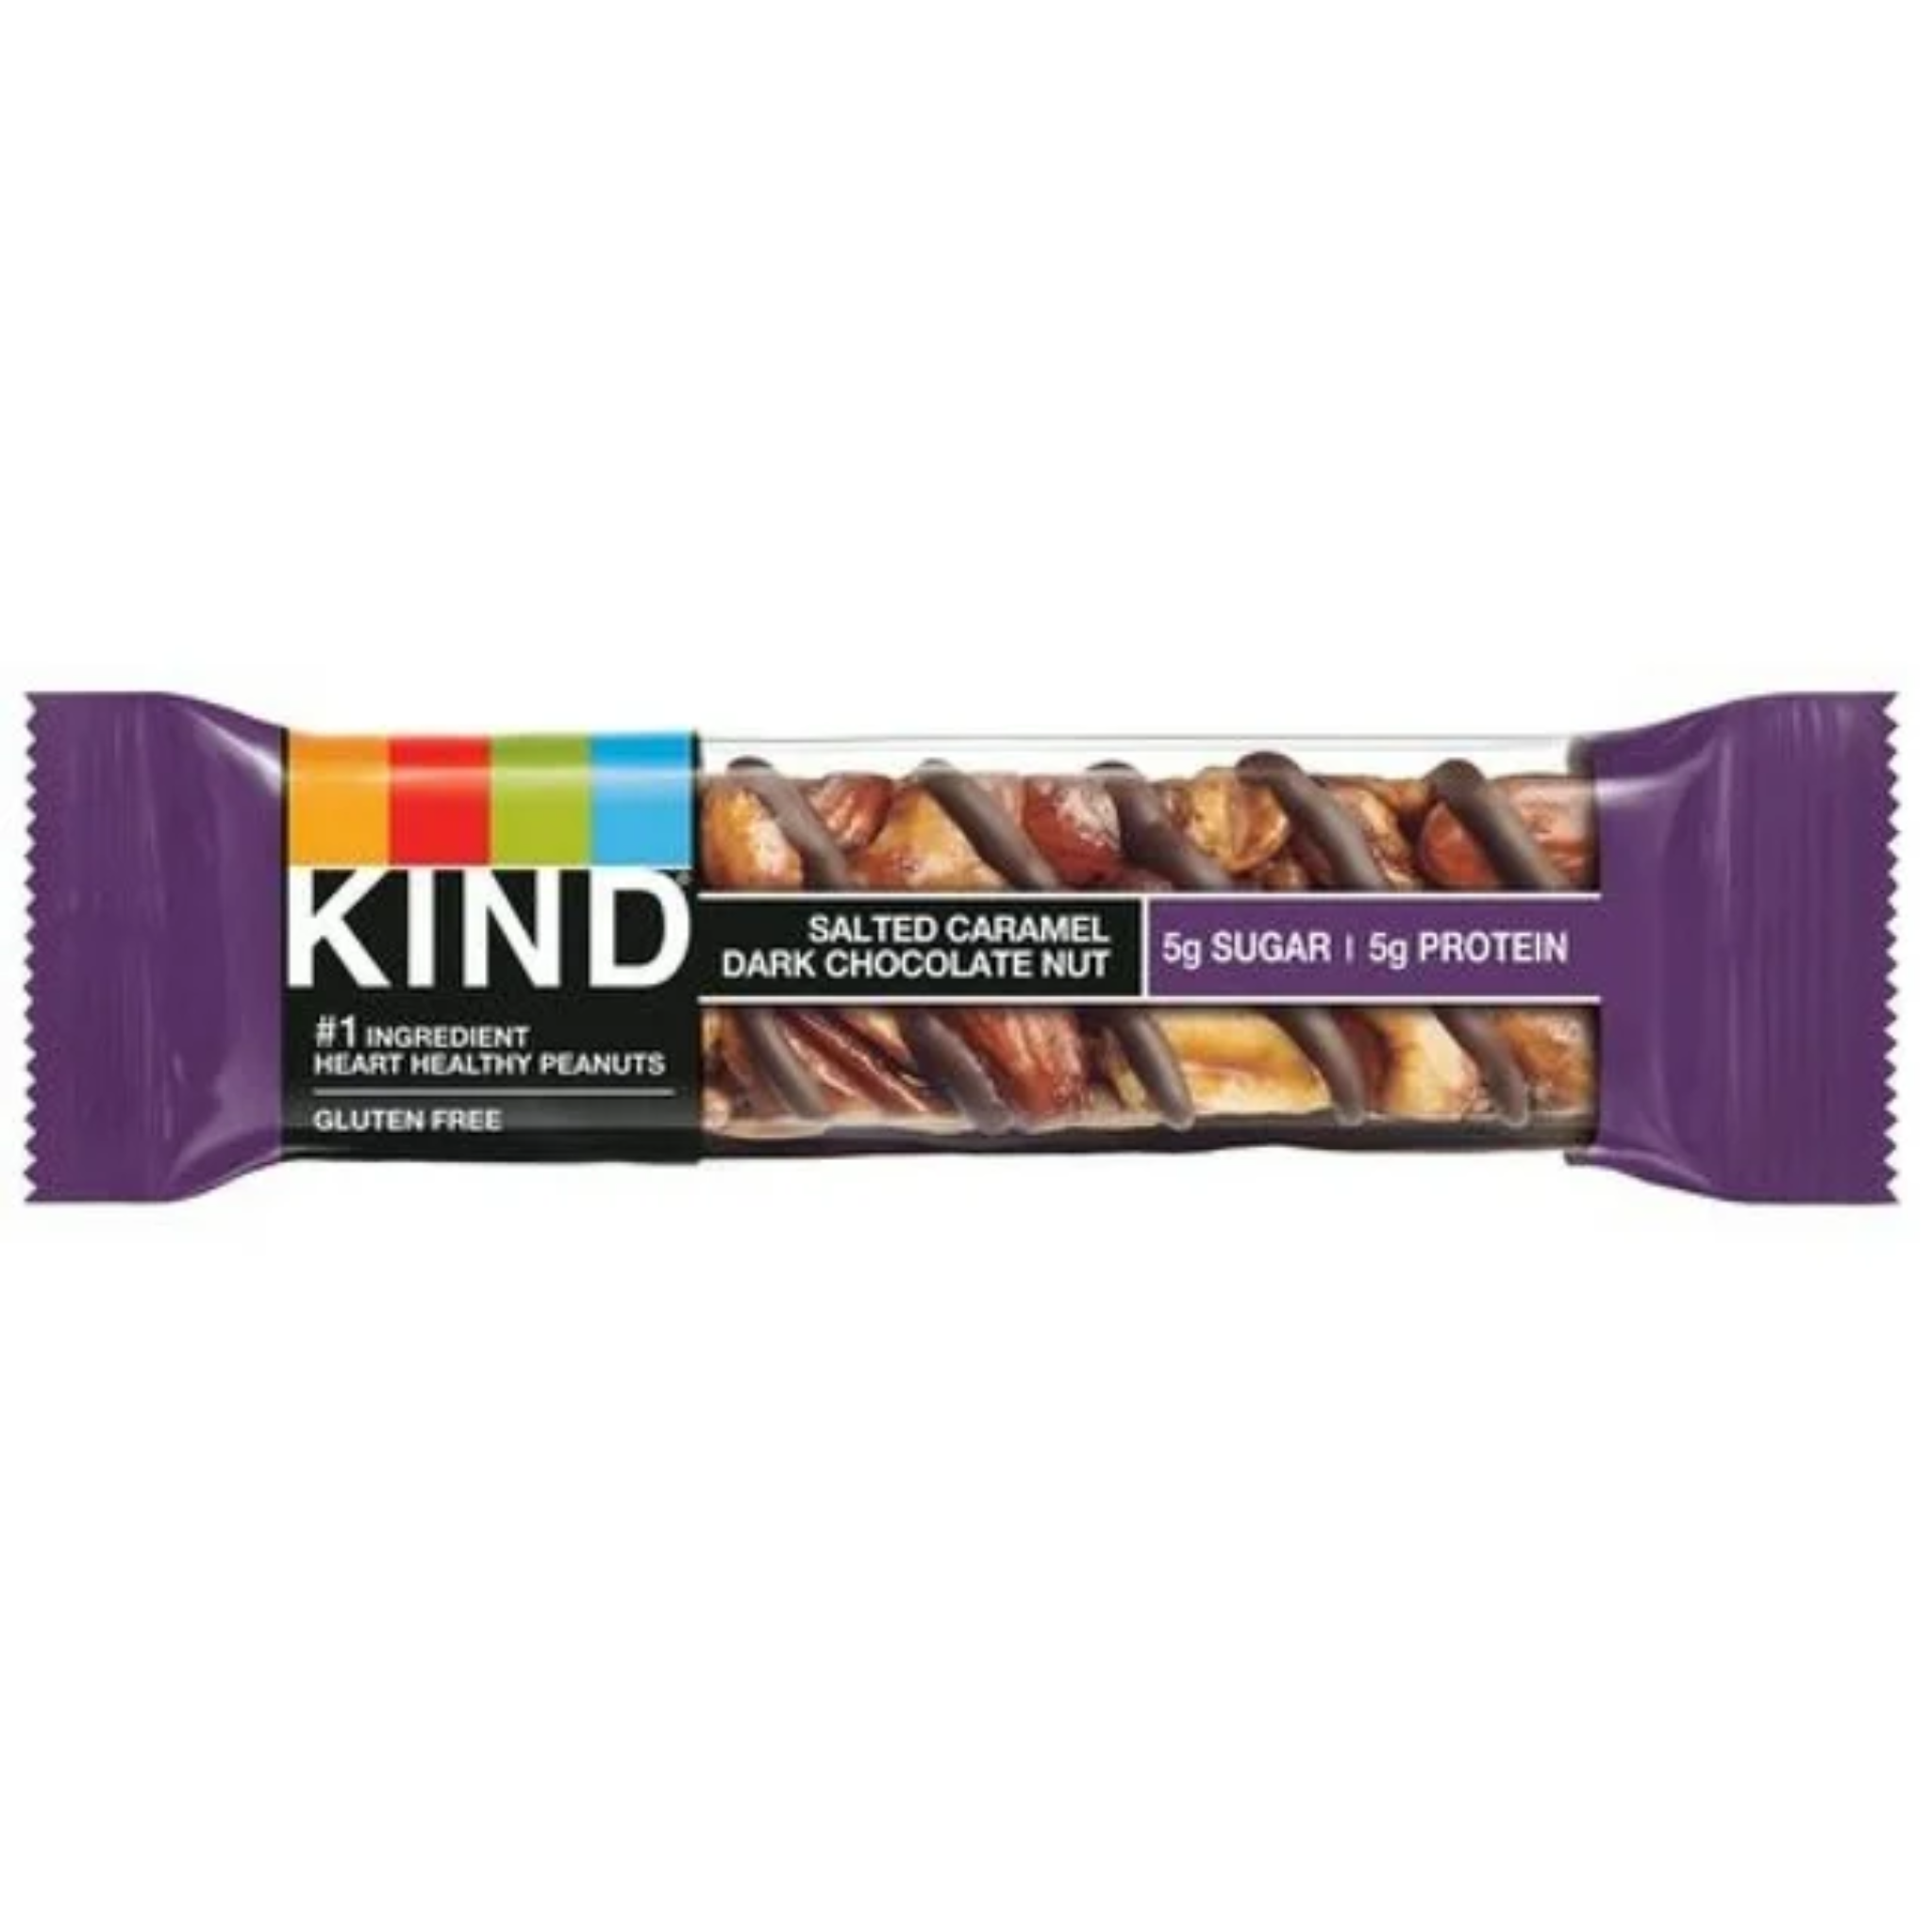 Kind Salted Caramel Dark Chocolate Peanut Bar